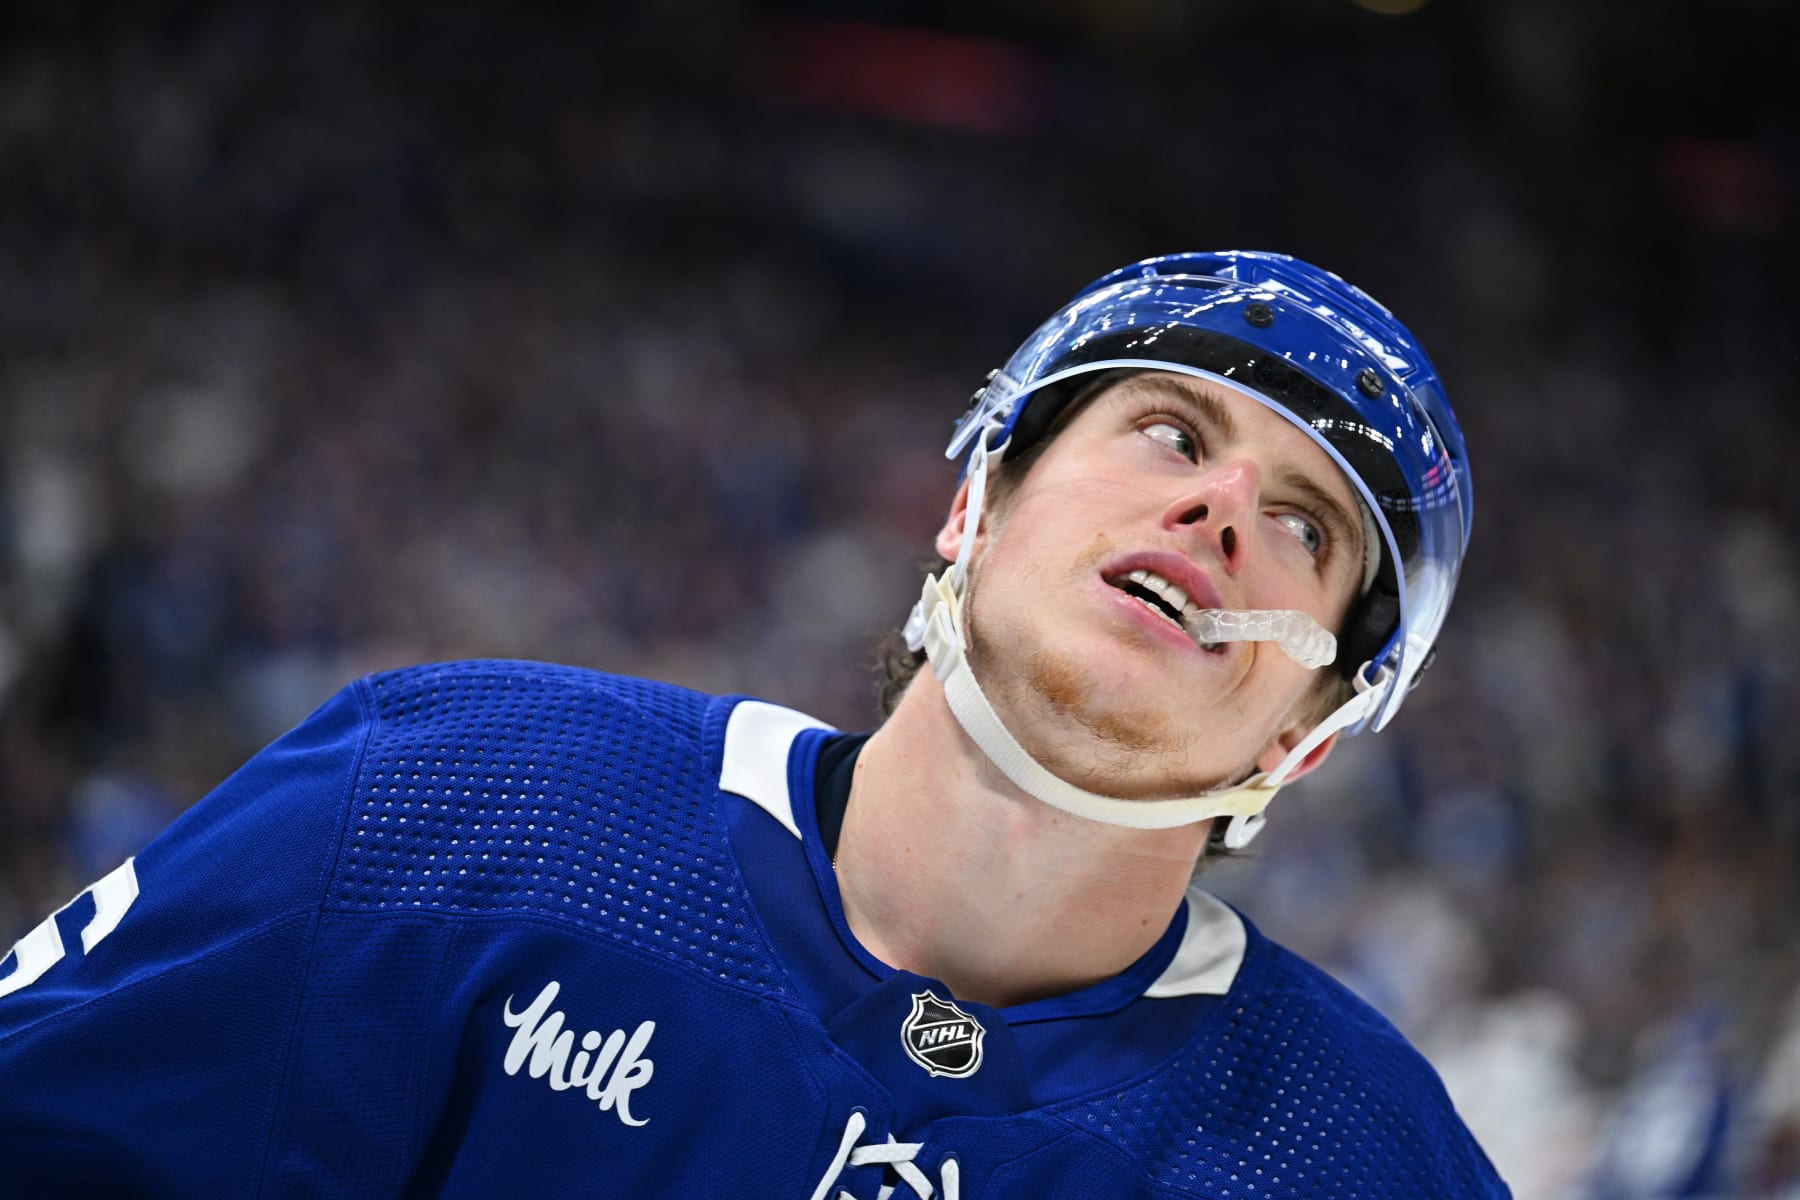 Leafs' top draft pick Mitch Marner talks conservative financial